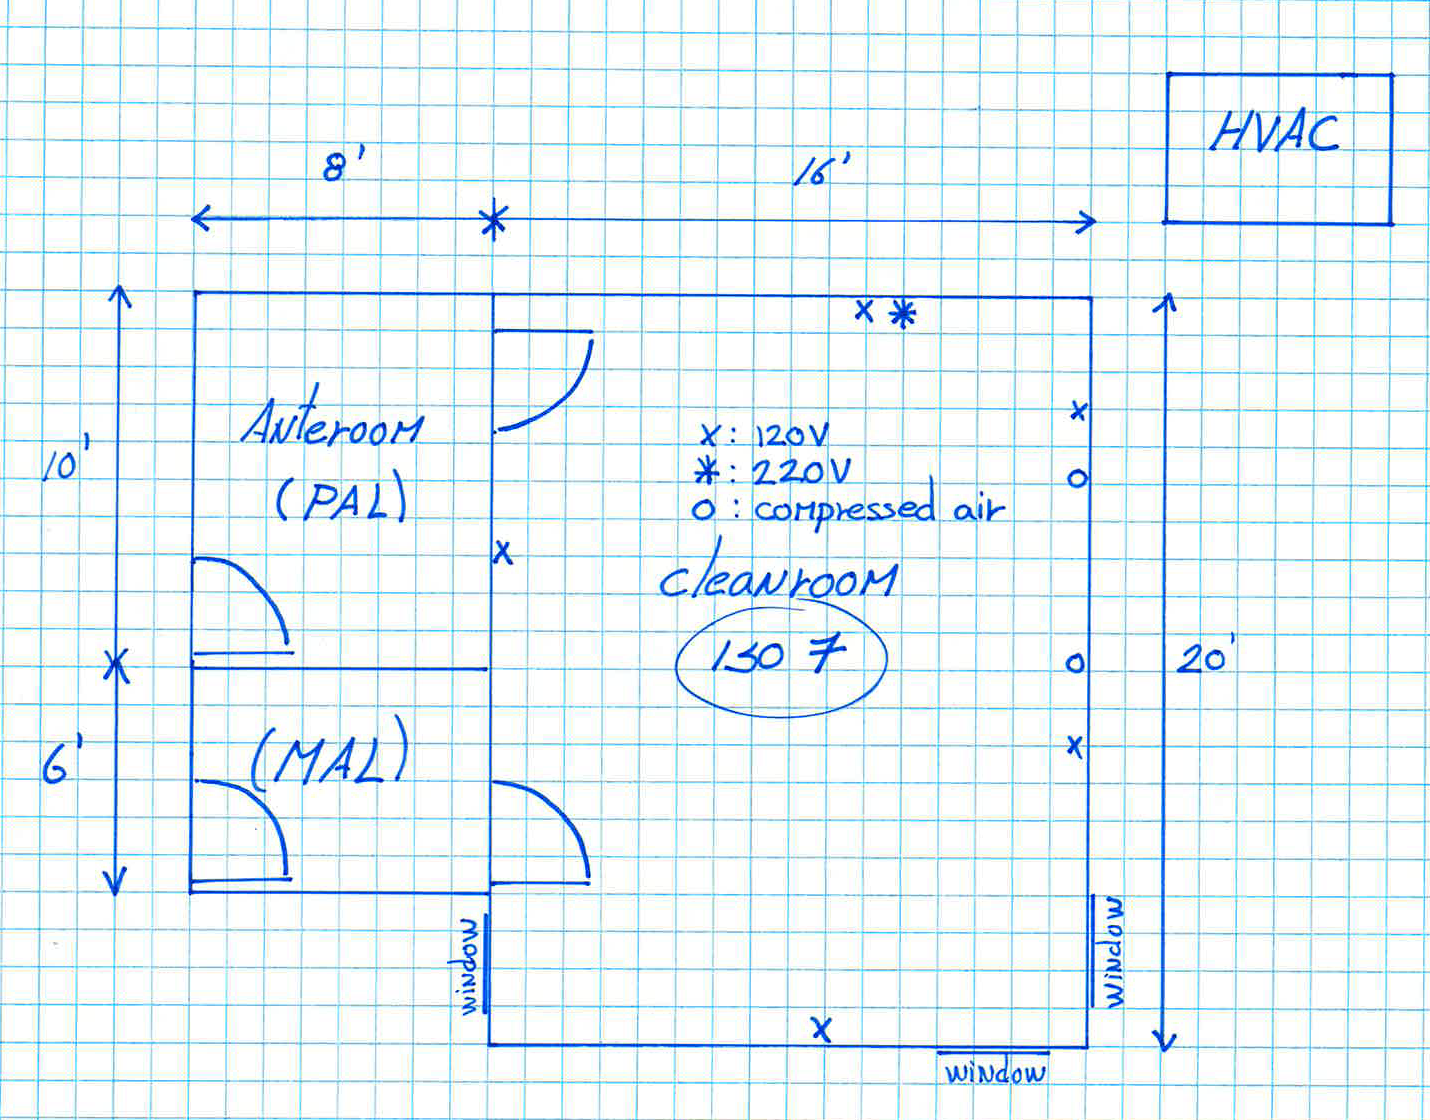 Sketch layout anteroom hvac iso 7 cleanroom modular